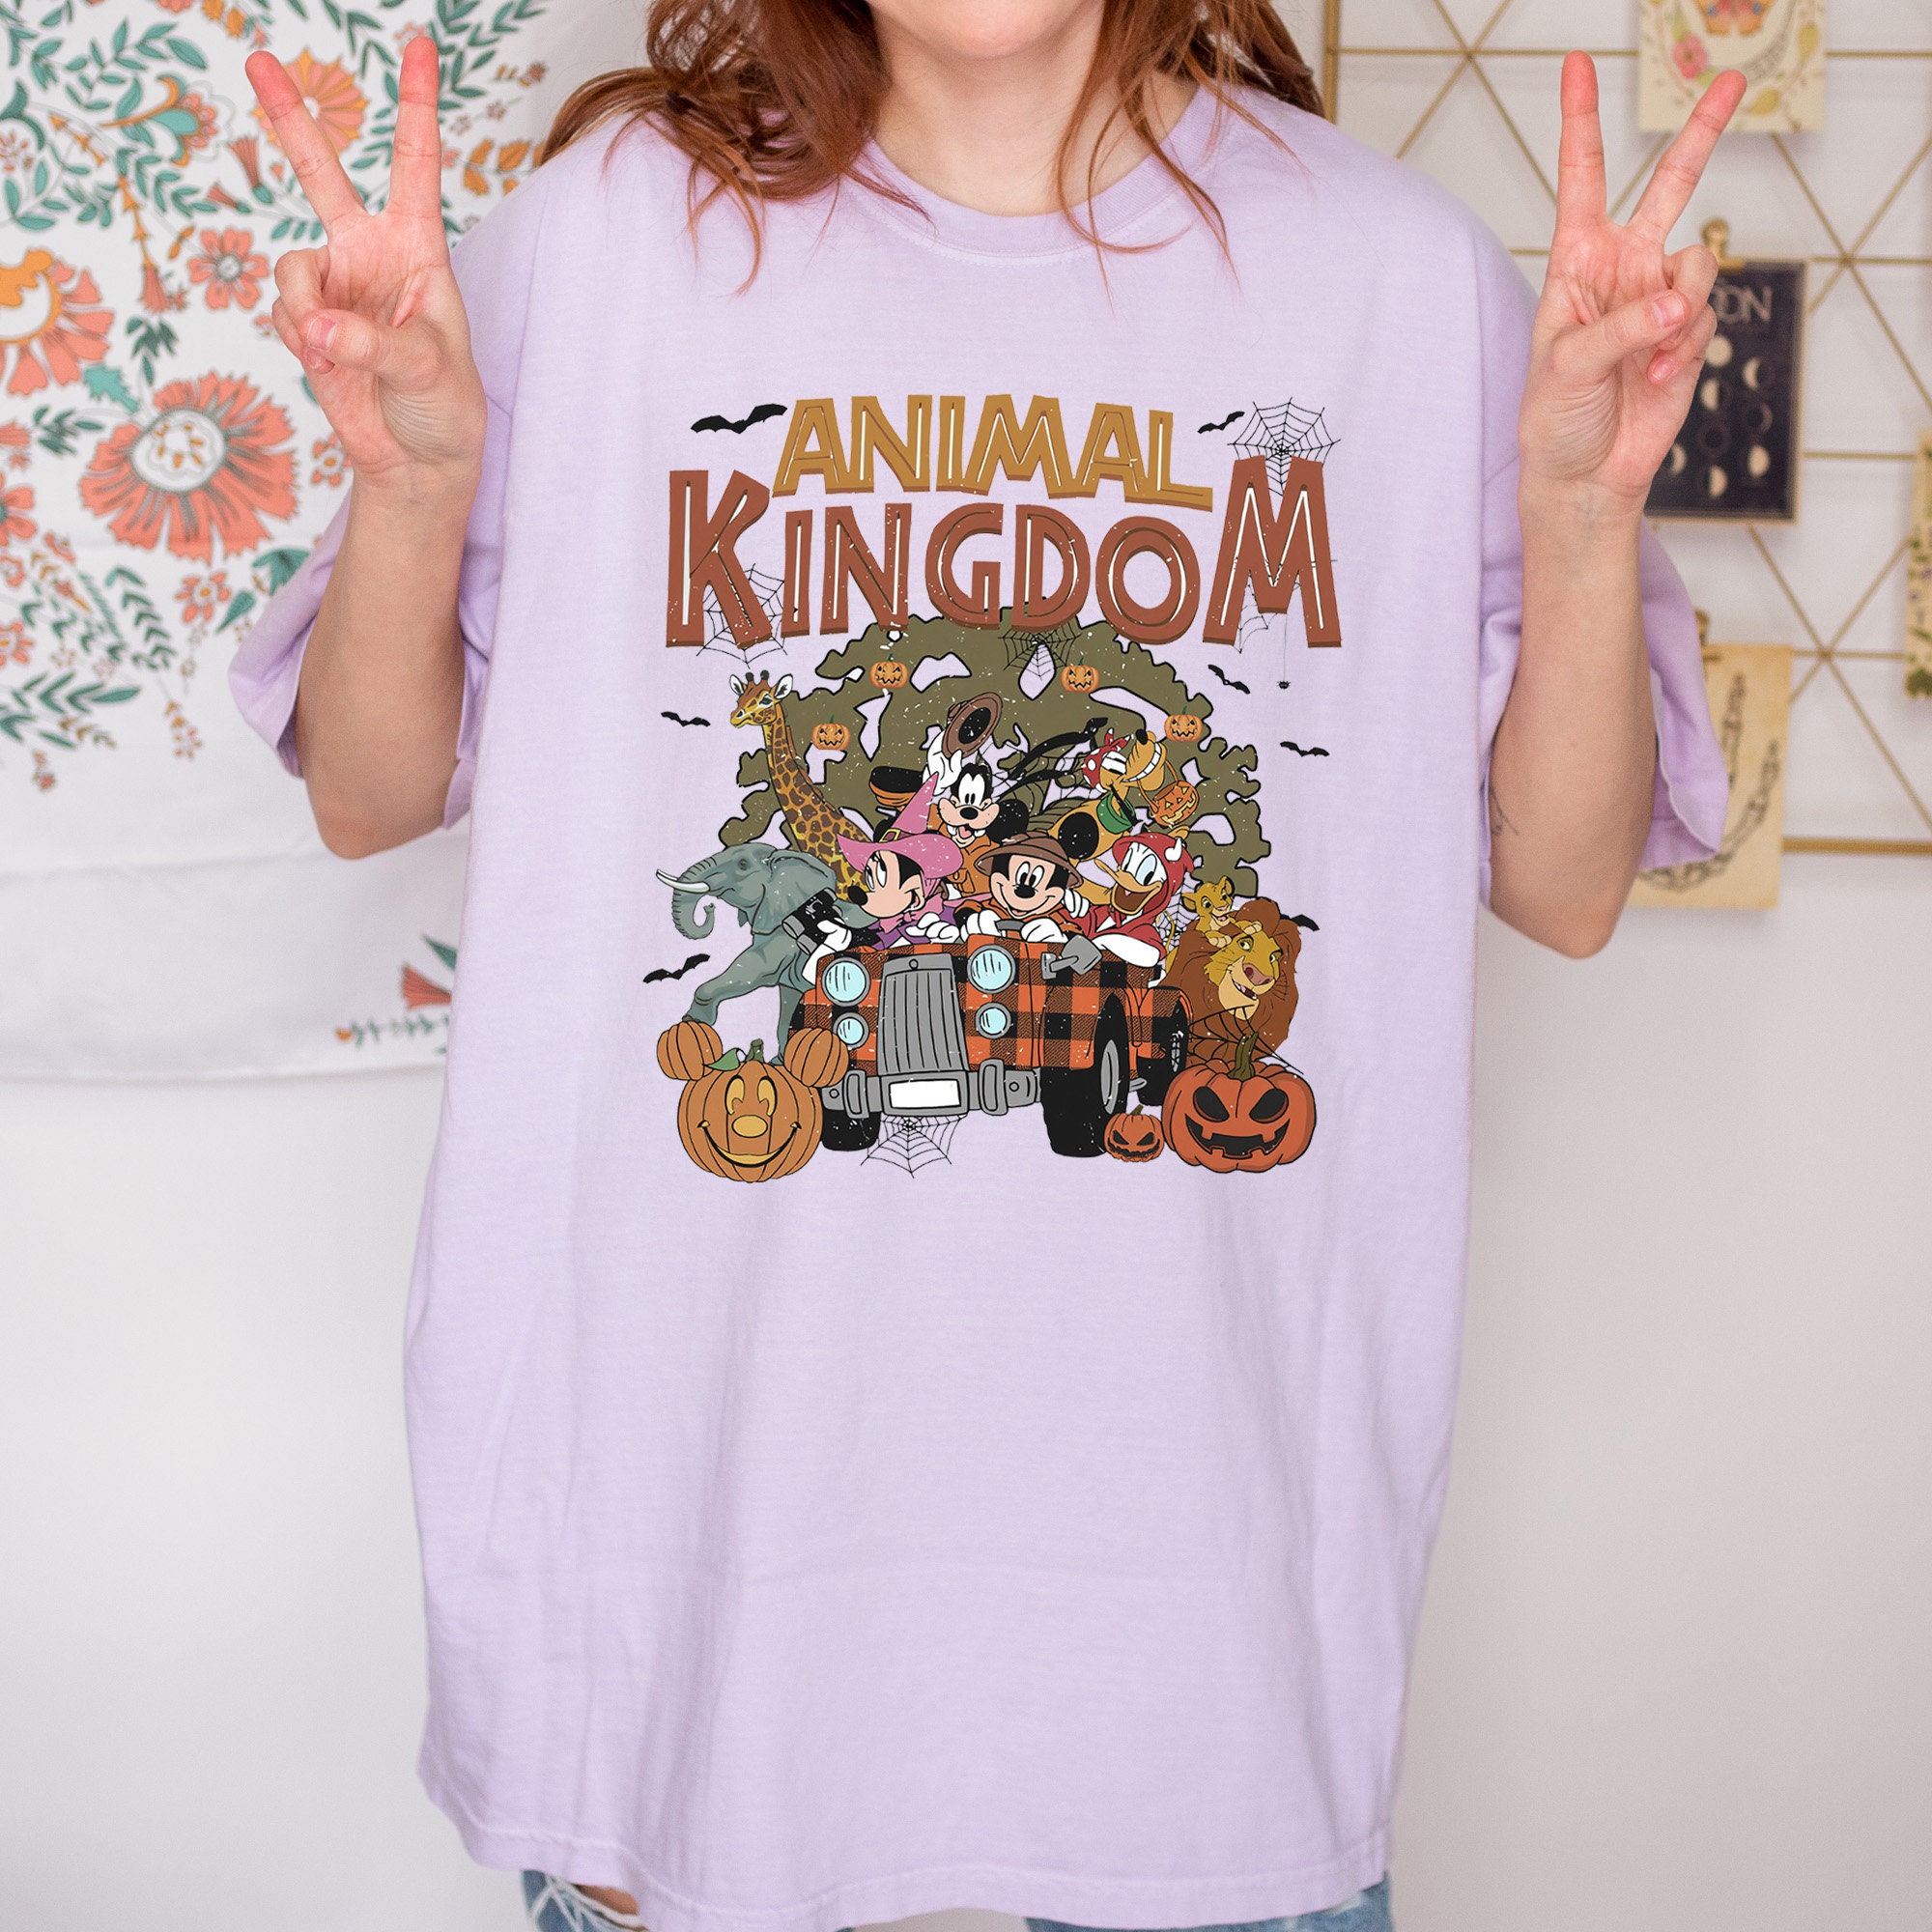 Discover Disney Animal Kingdom Halloween Shirt, Mickey And Friends Animal Kingdom Shirt, Disneyland Halloween Shirt, Disney Family Vacation Shirt